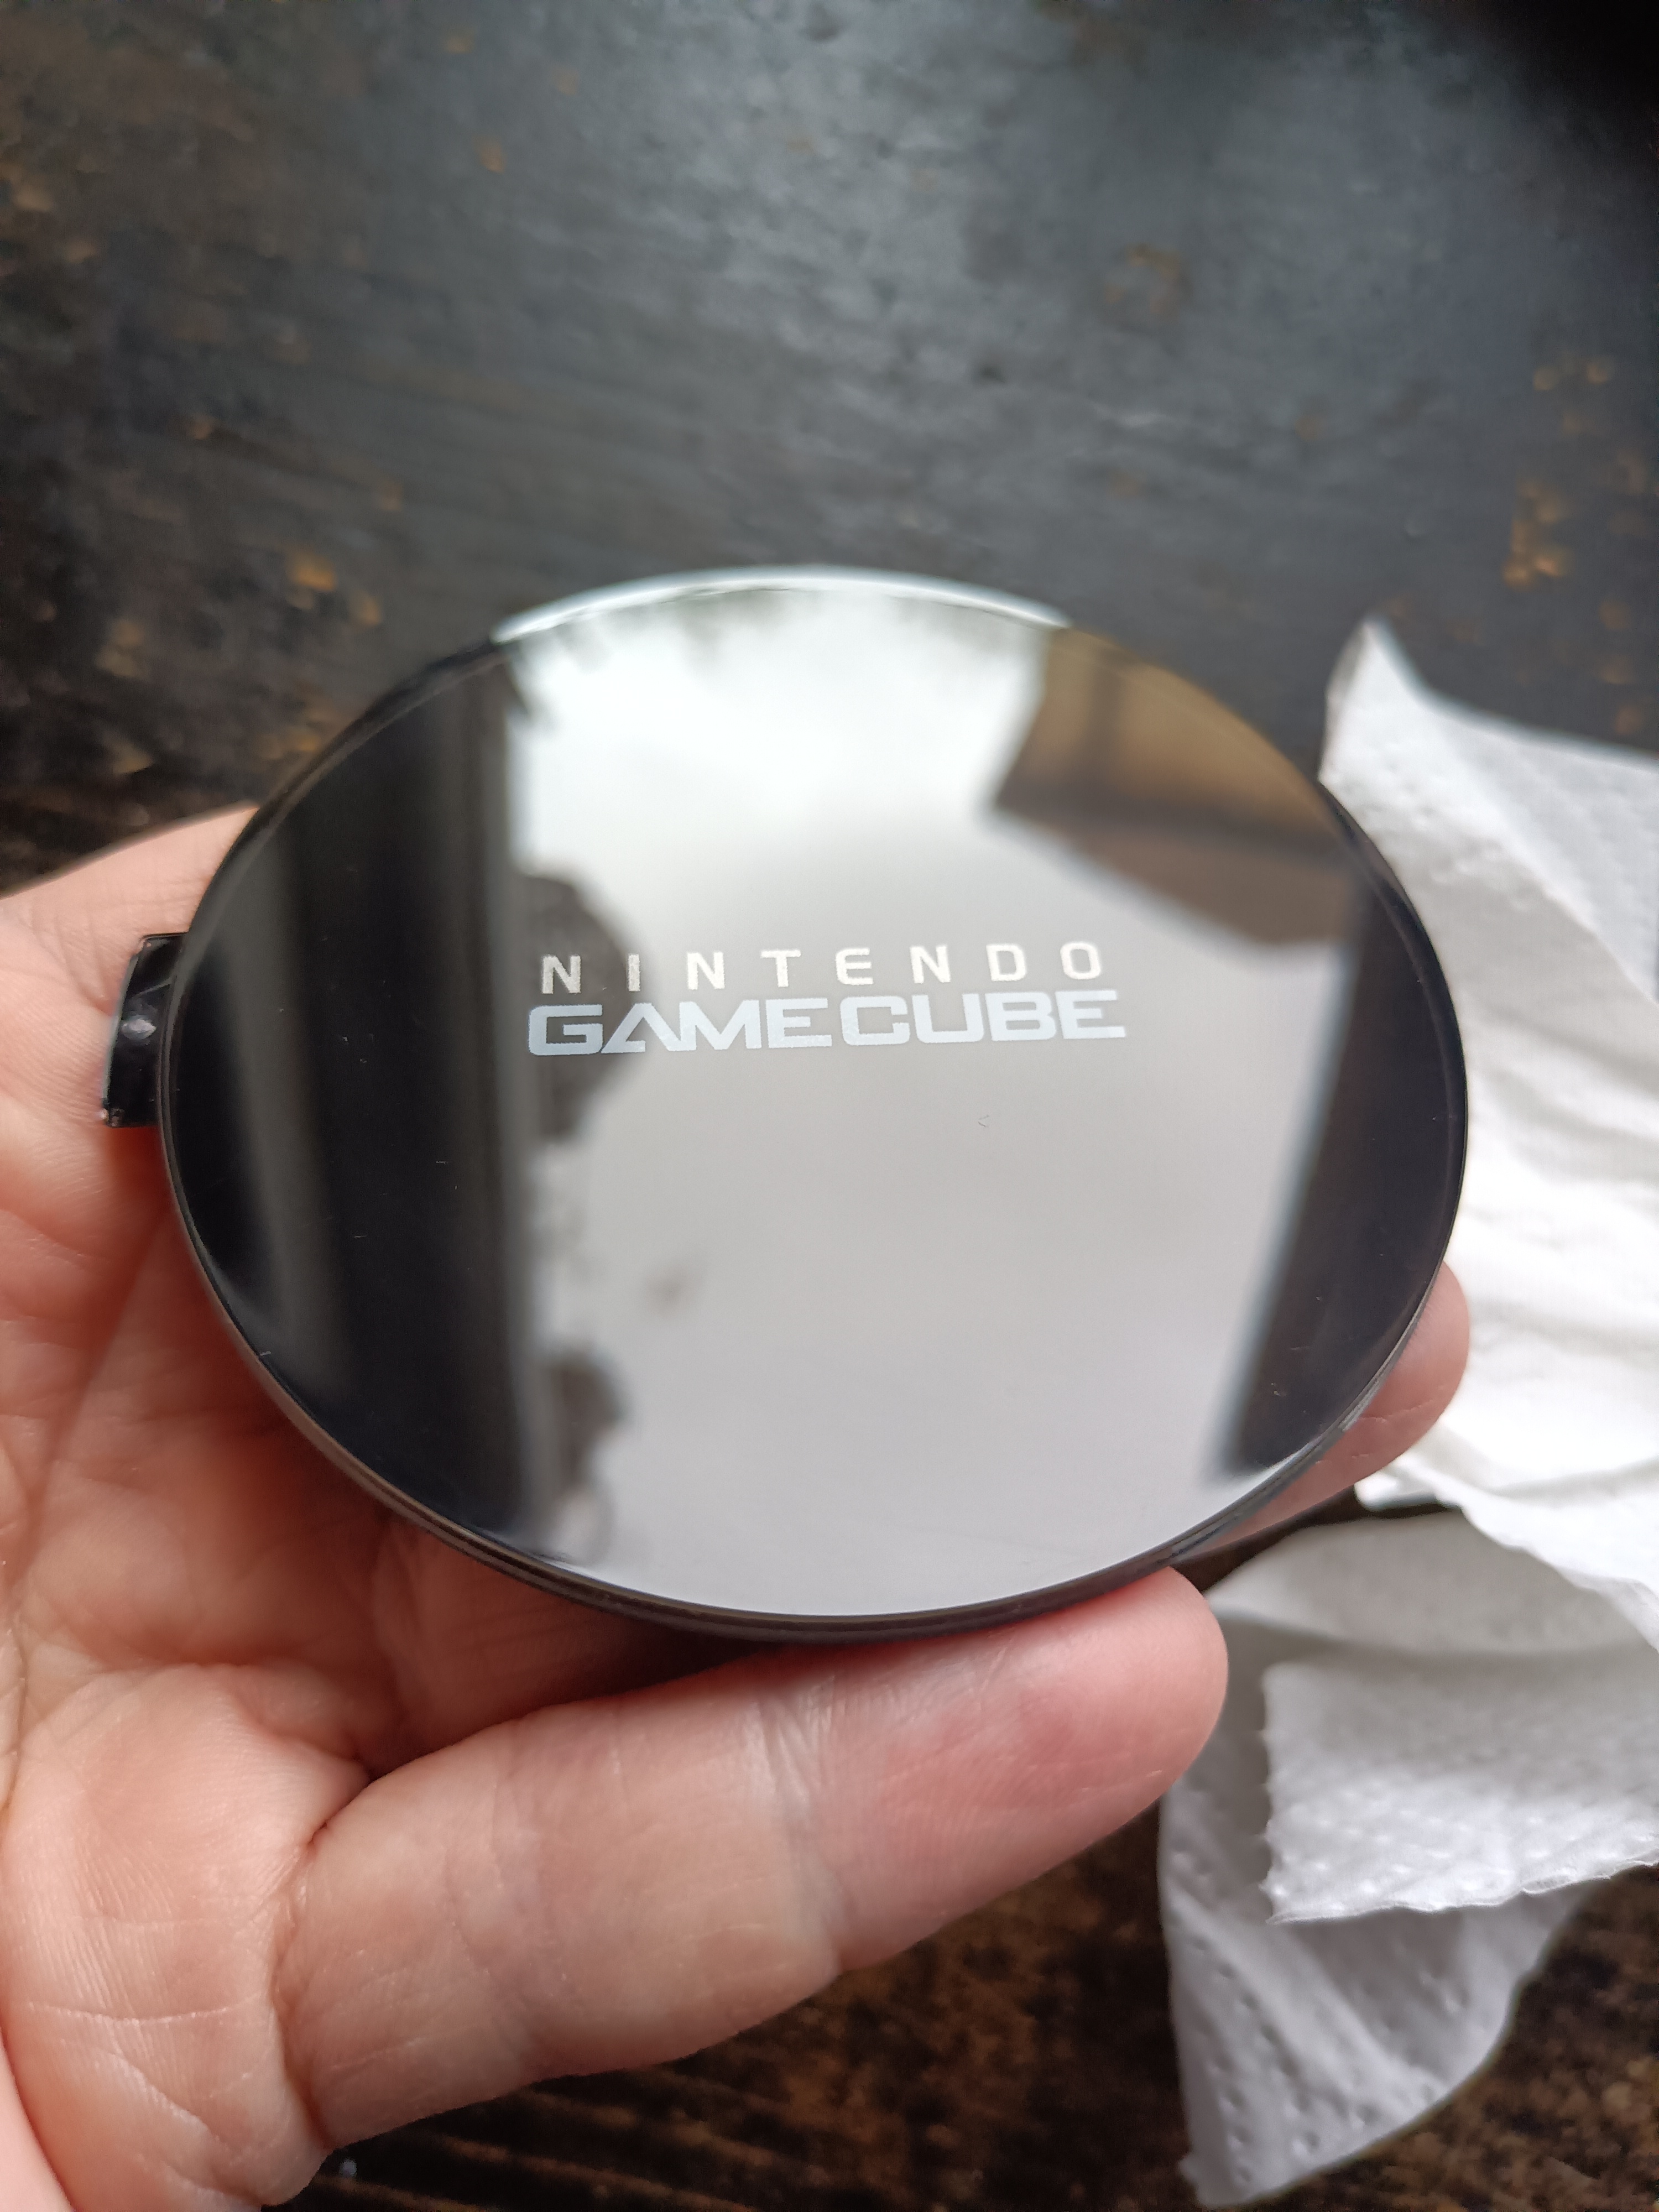 Nintendo GameCube jewel after polishing